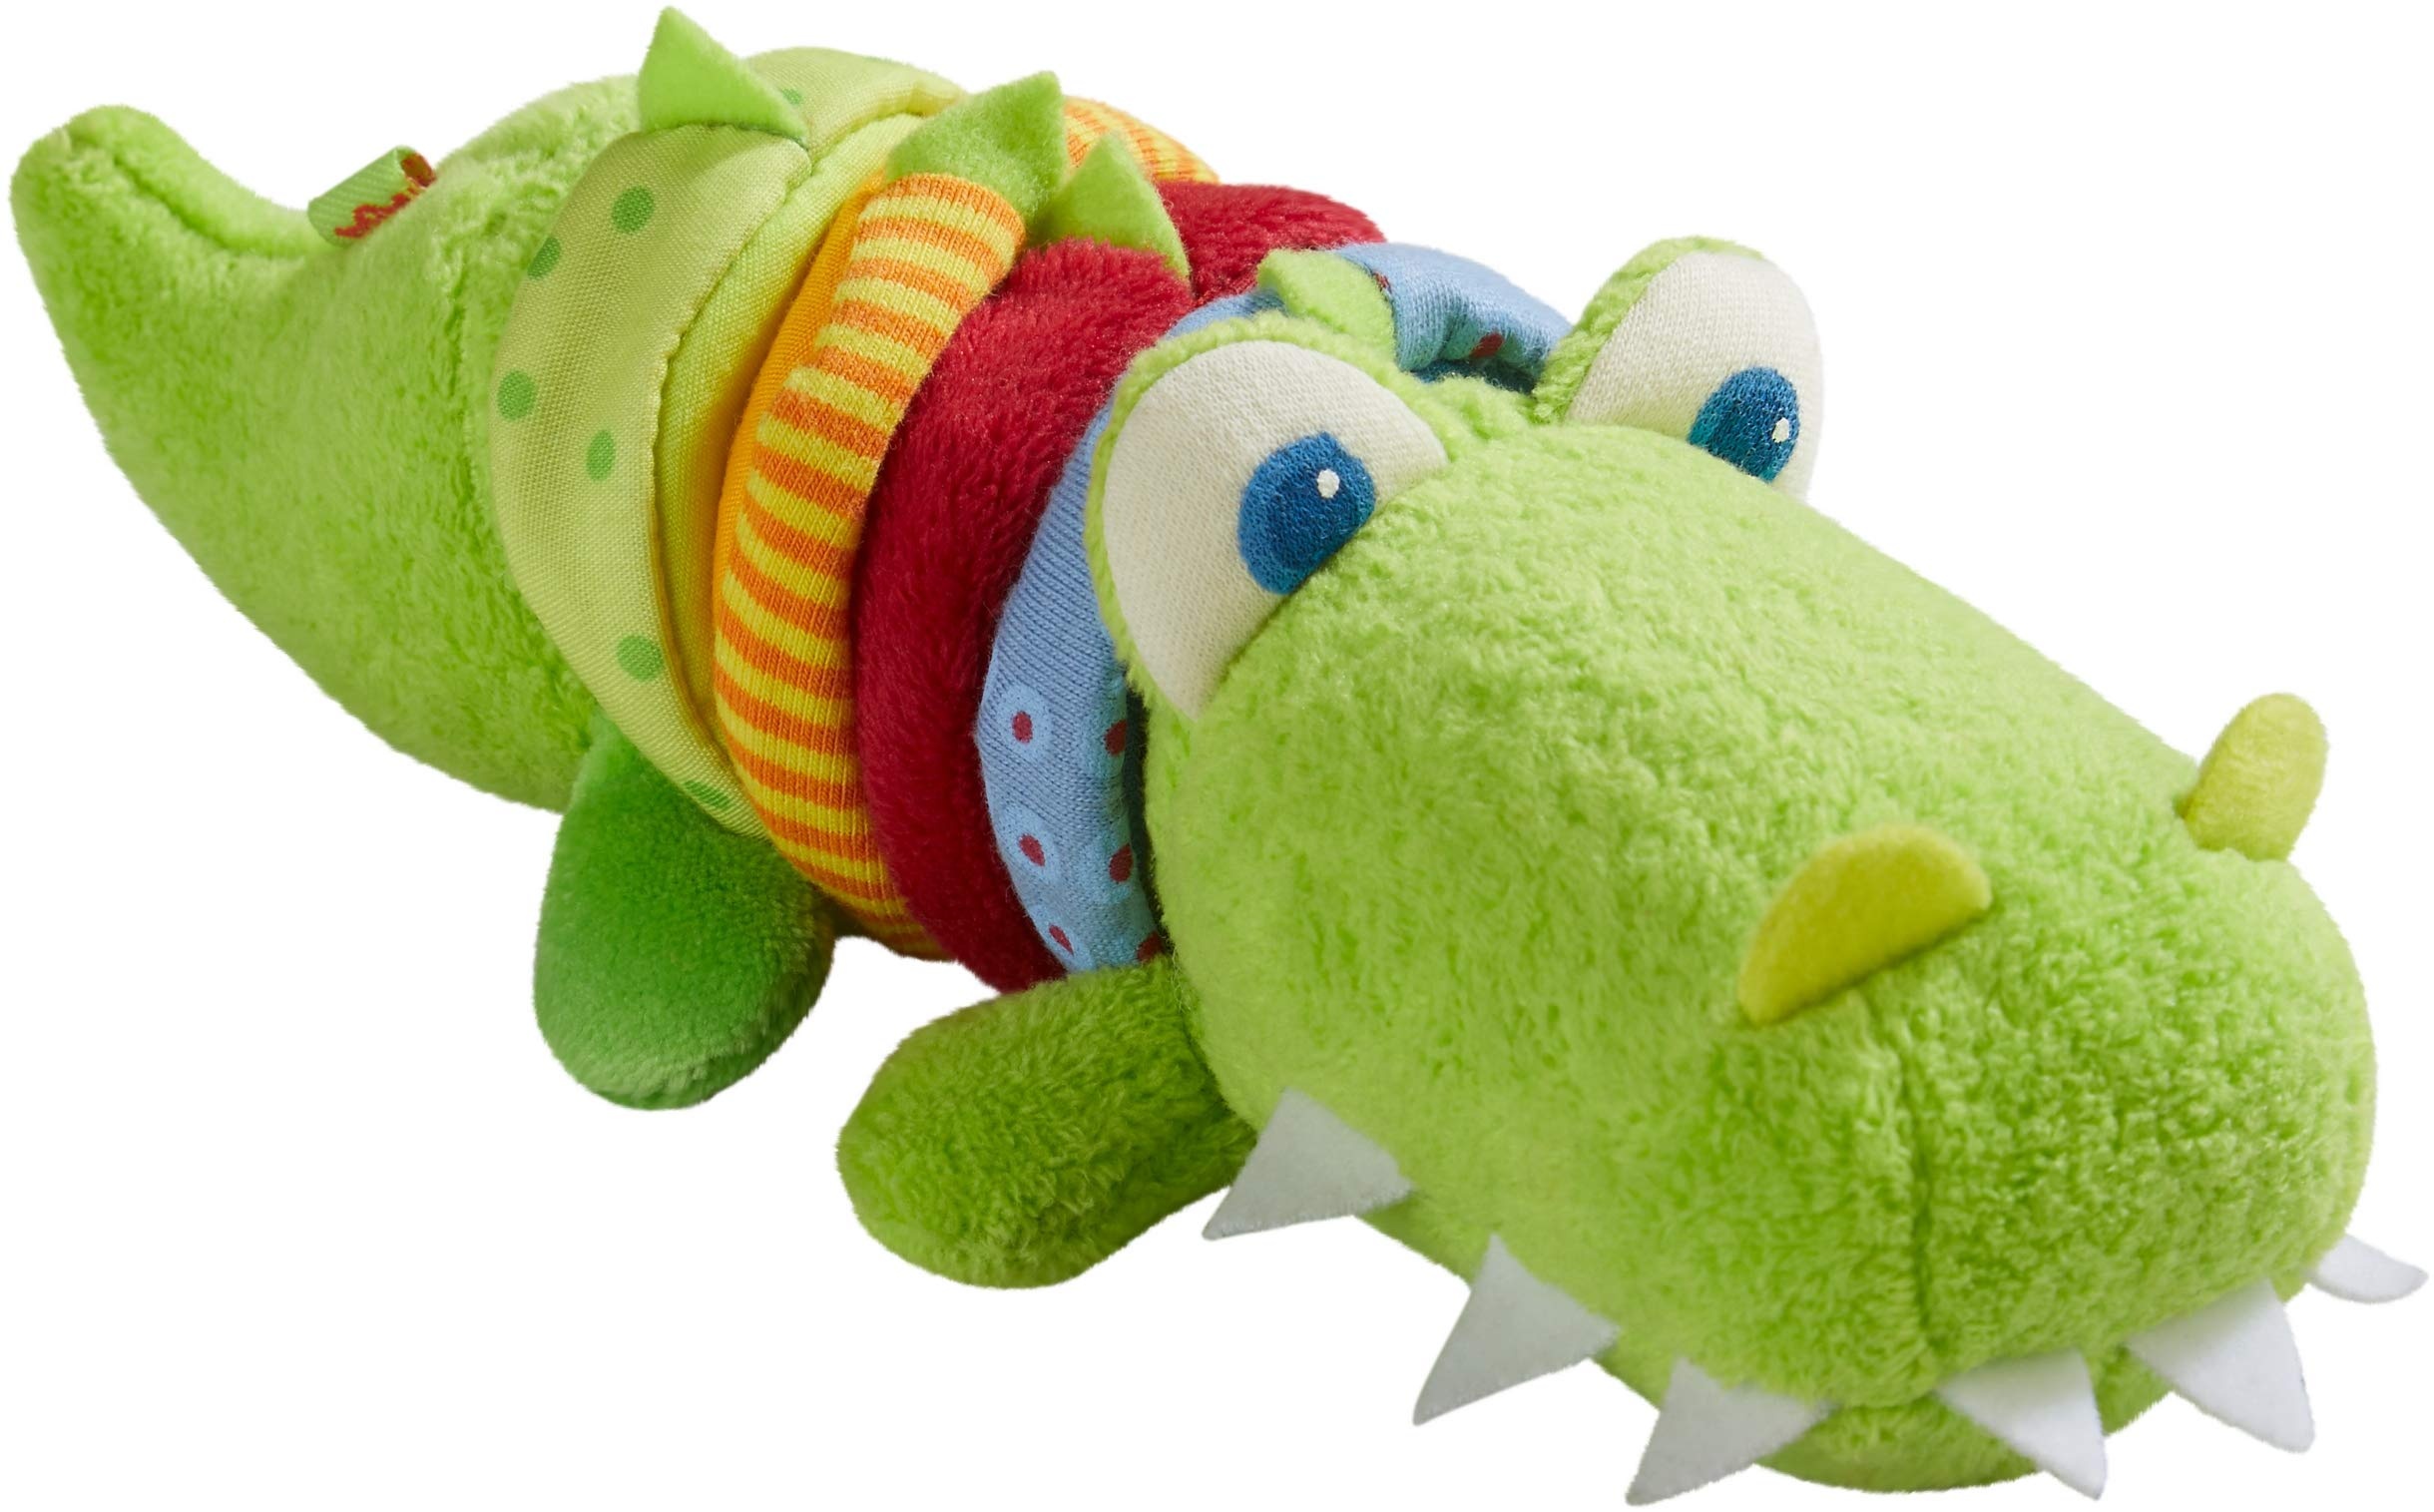 HABA 304759 - Ratterfigur Kroko, Baby-Spielzeug aus Stoff mit Rattermotor, Spielzeug ab 6 Monaten